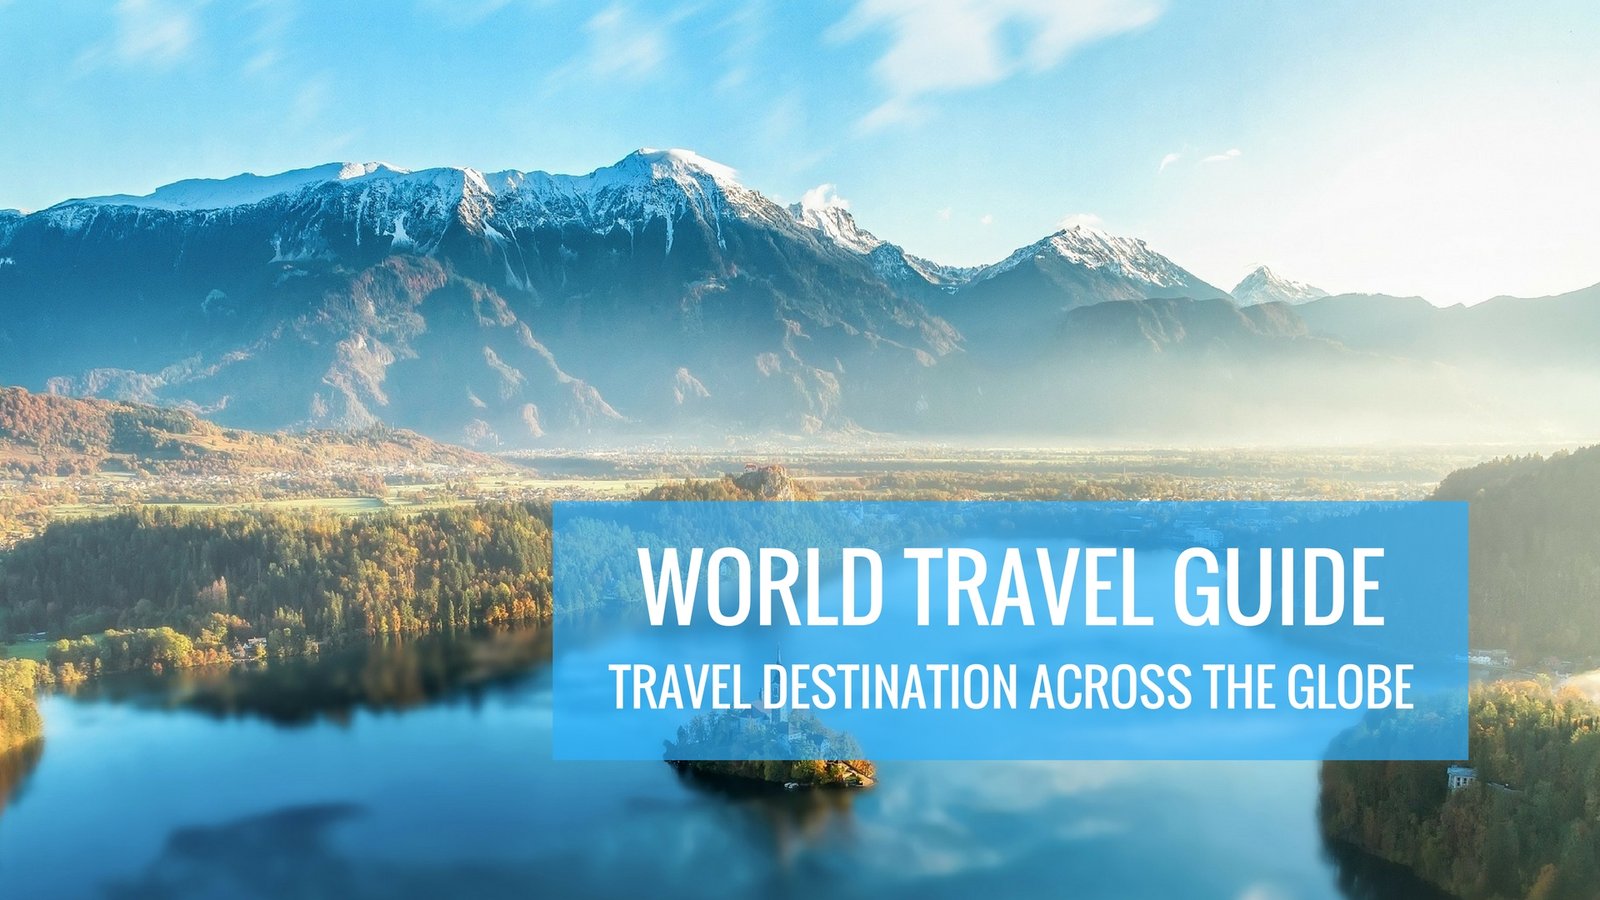 World travel guide - world tour